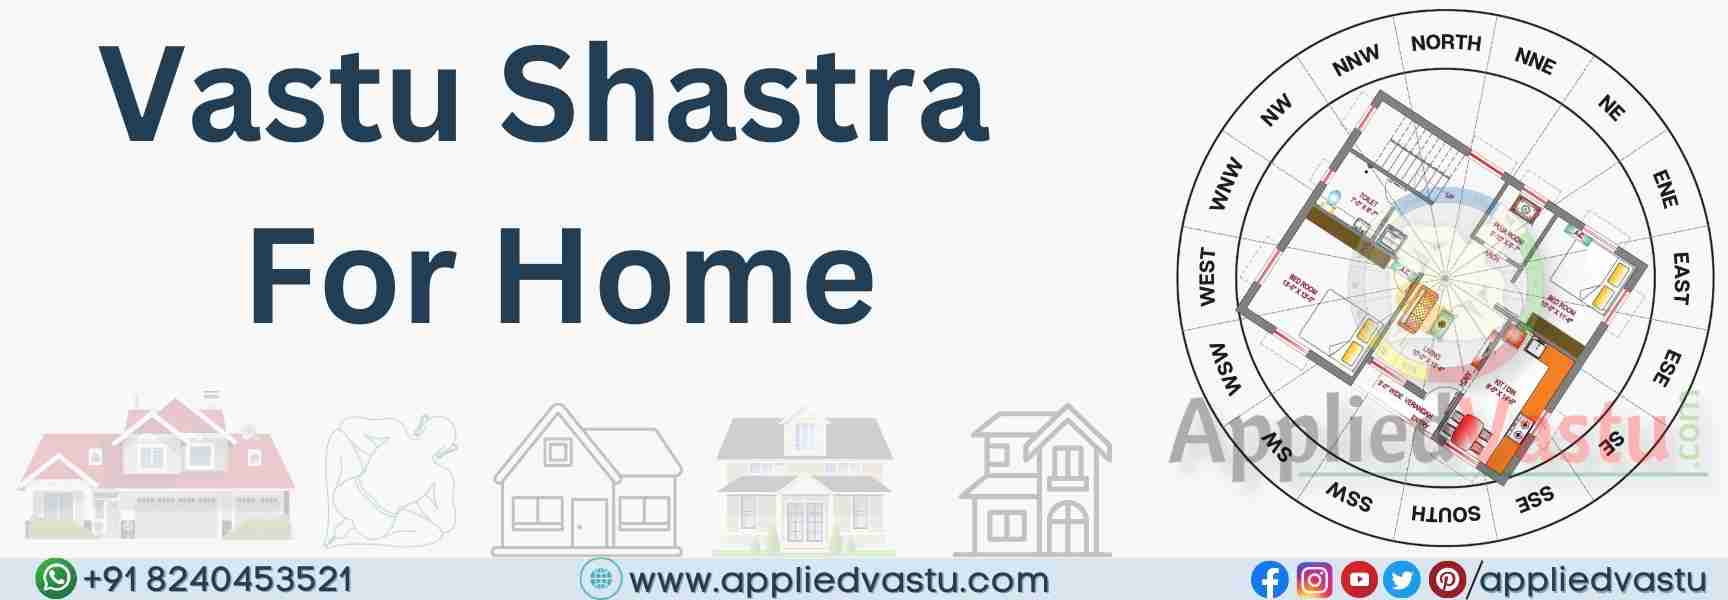 Vastu Shastra For Home - AppliedVastu